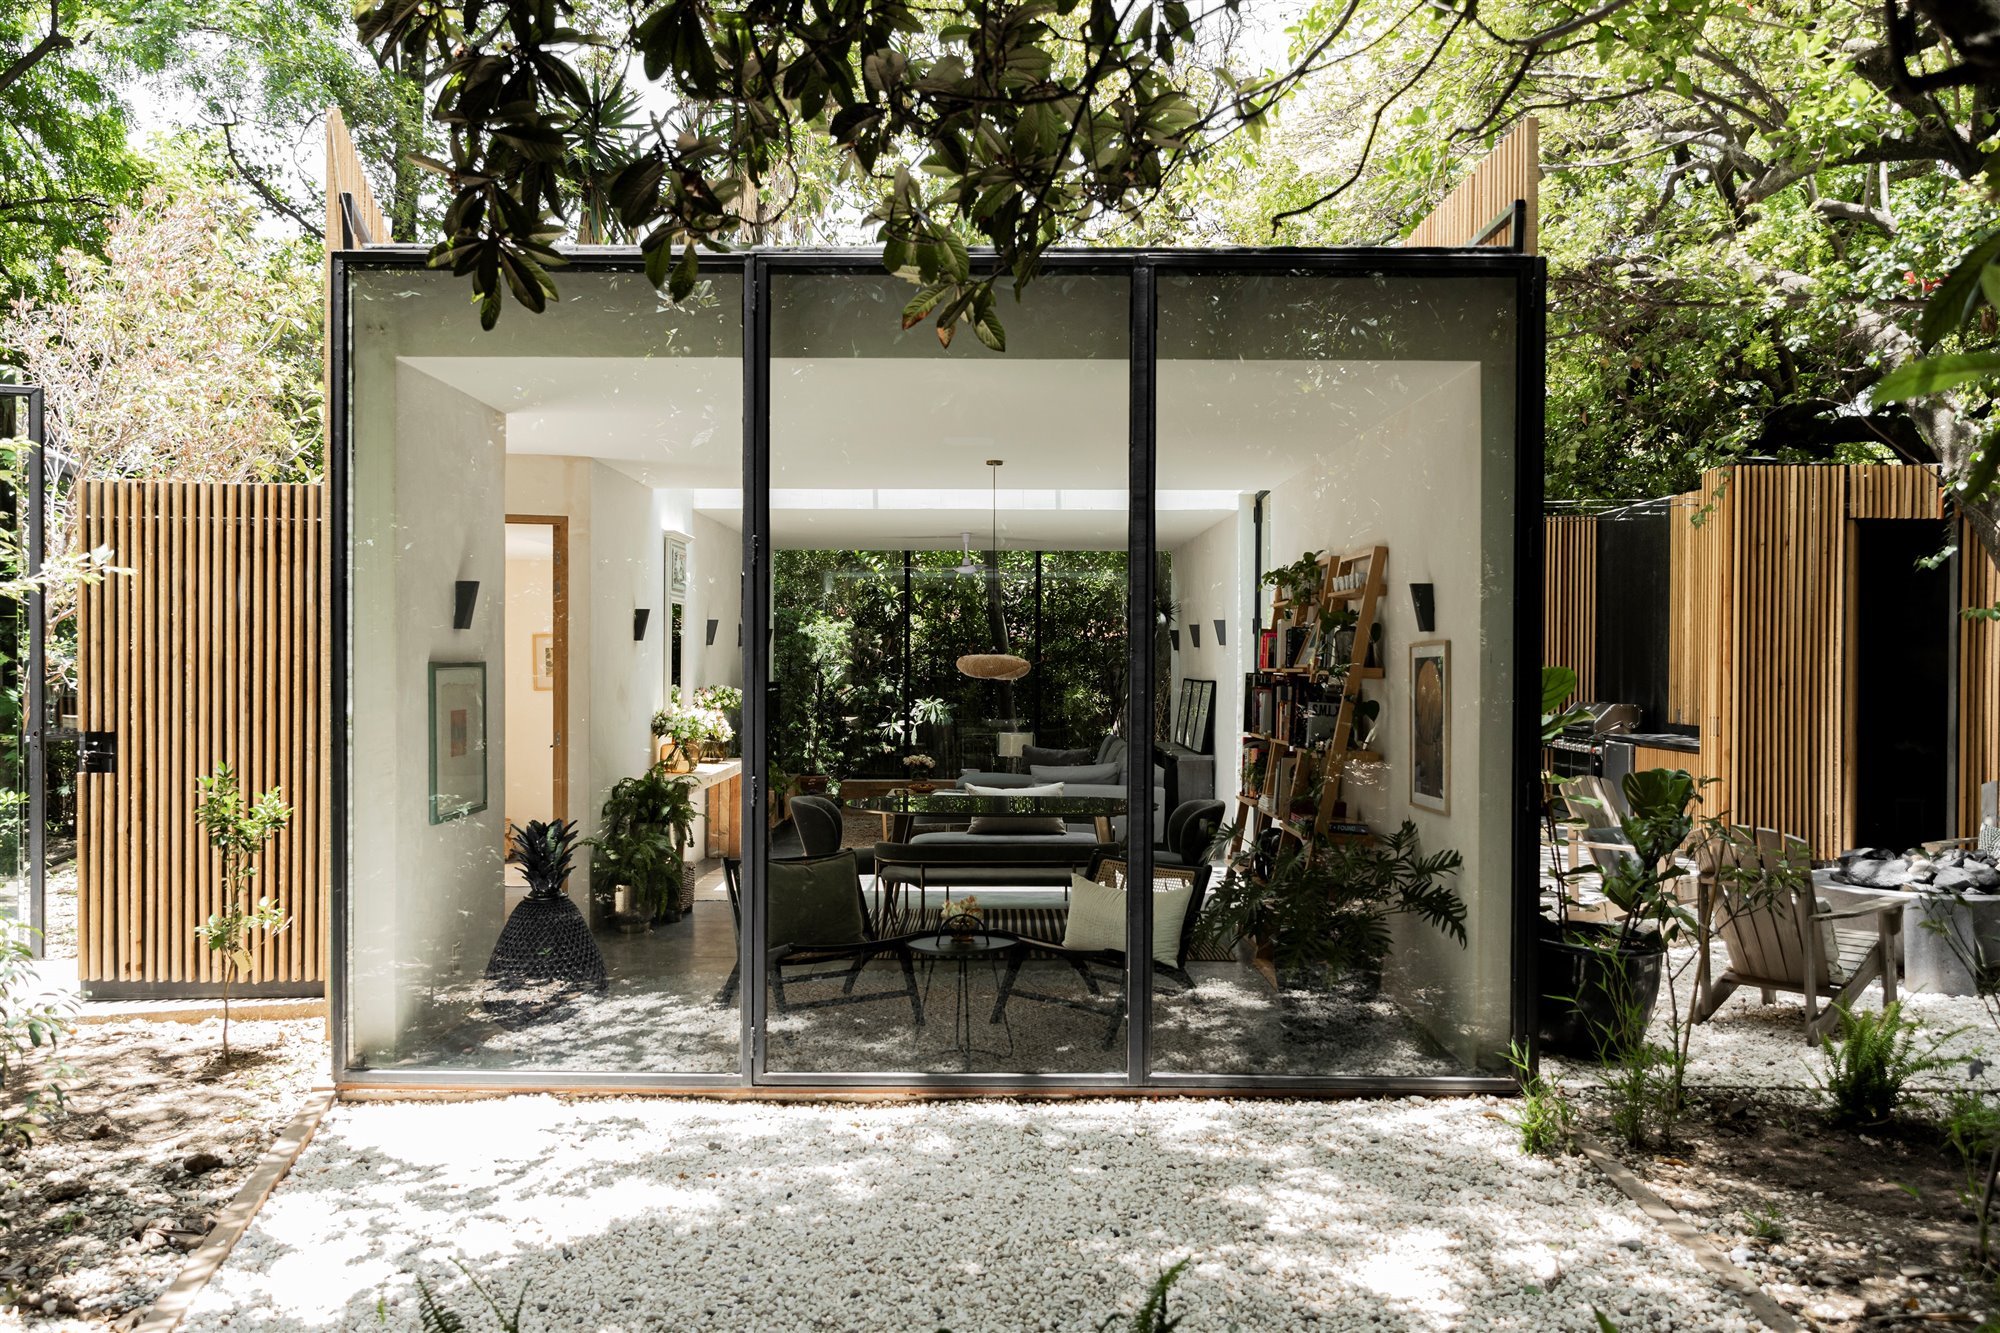 Casa moderna en Mexico rodeada de vegetacion en la selva patio interior